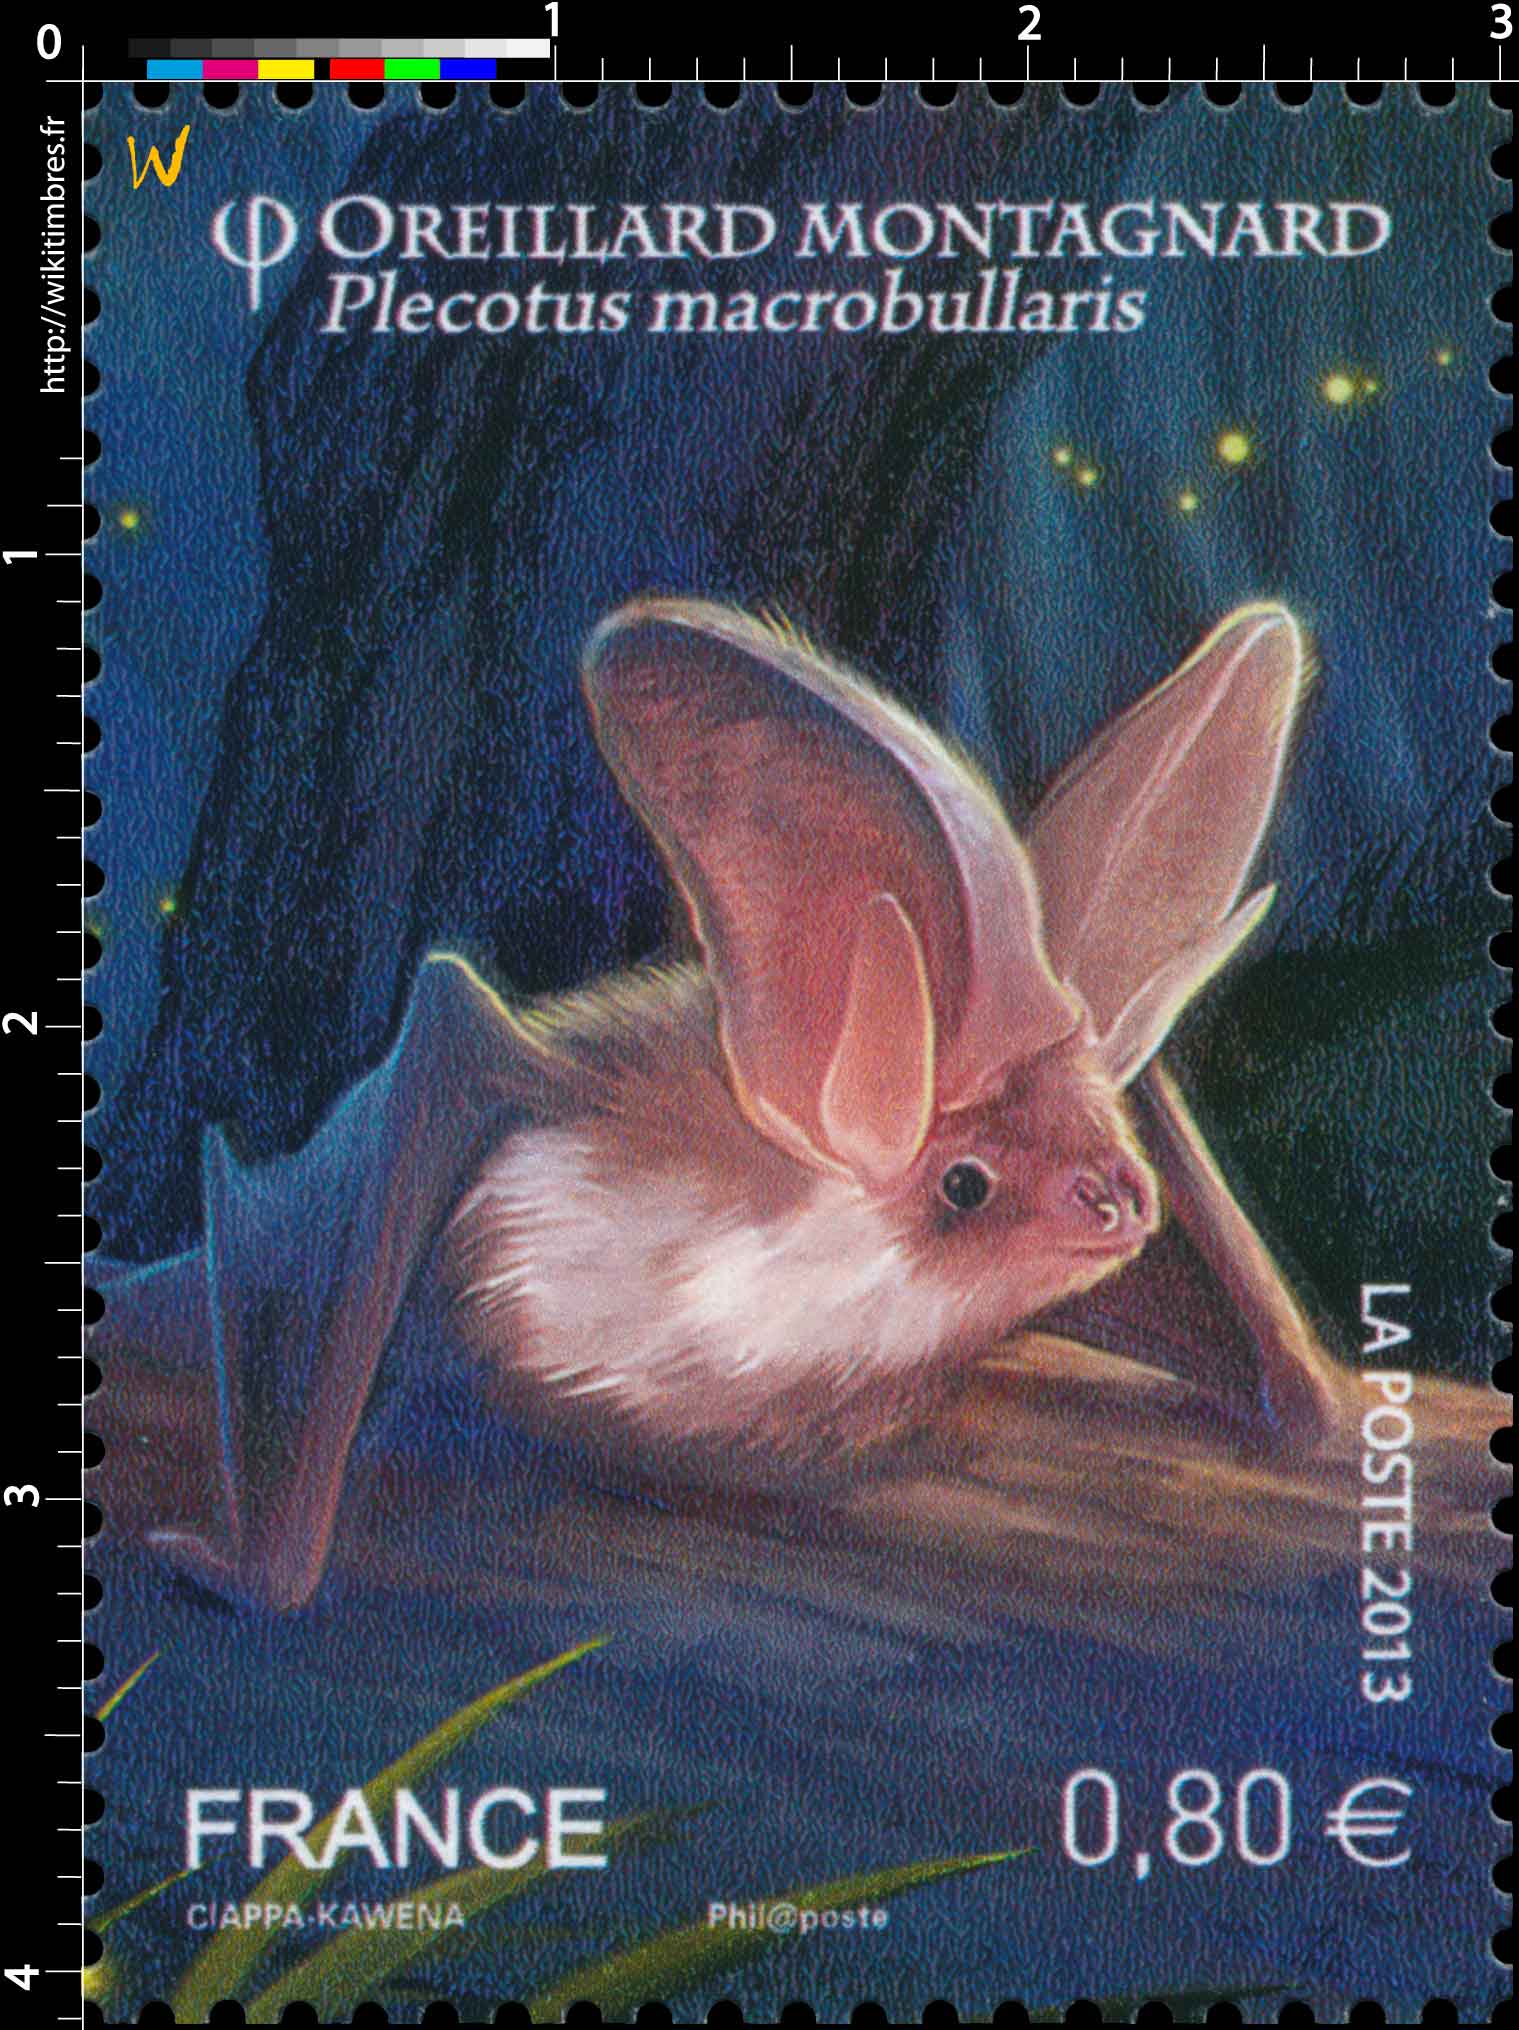 2013 Oreillard Montagnard Plecotus macrobullaris